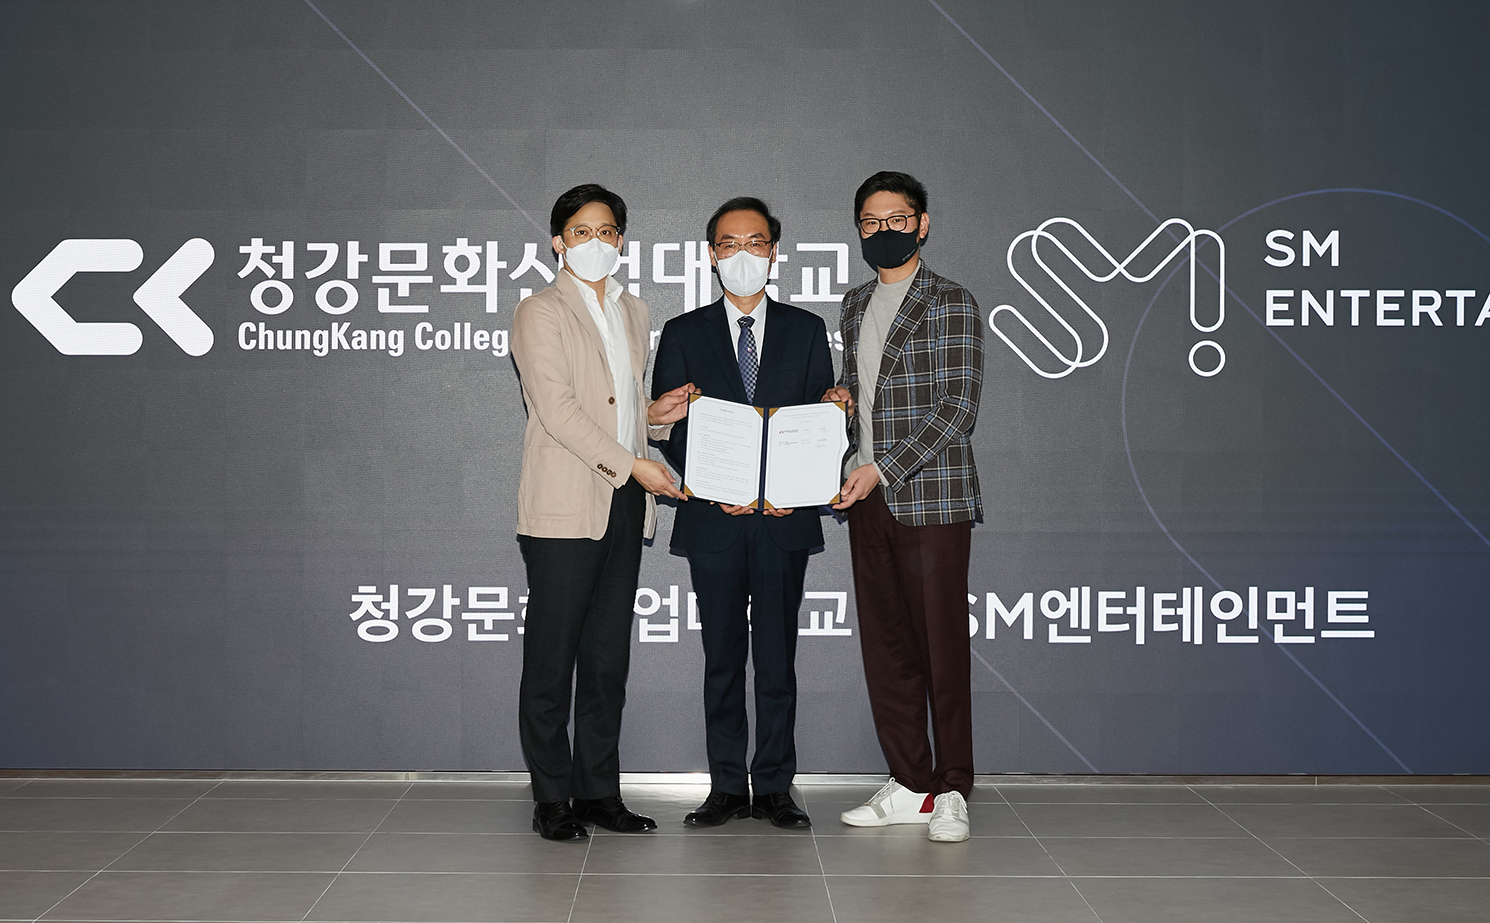 SM娱乐为加强元宇宙内容的竞争力，与靑江文化产业大学签订产学合作MOU！